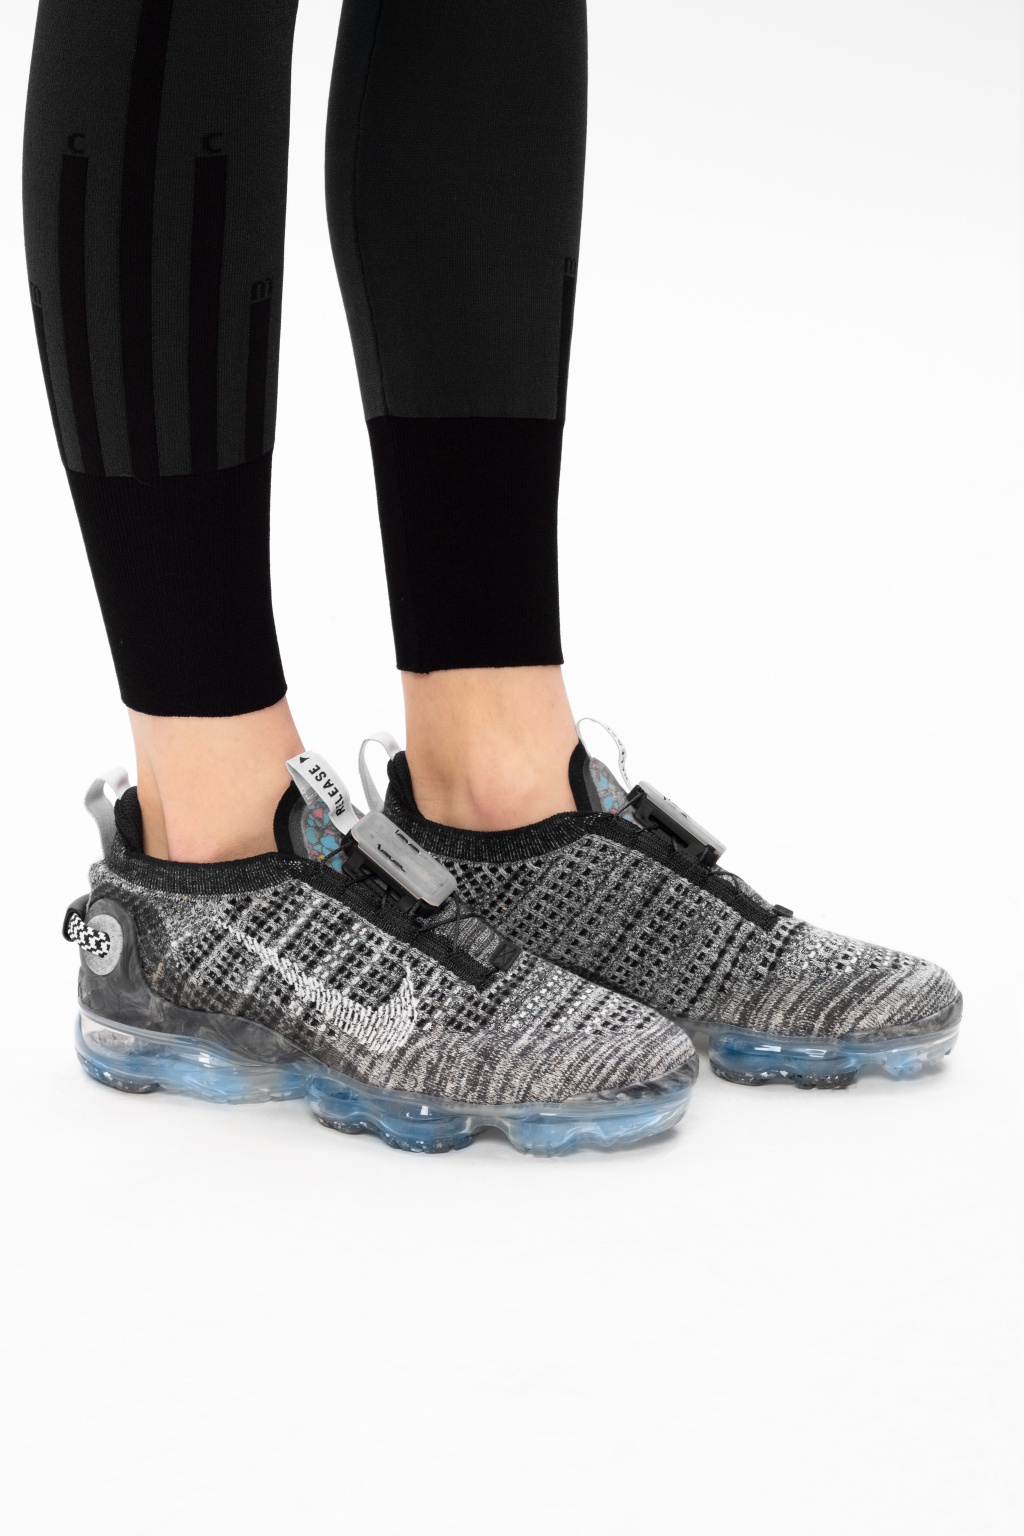 Nike Vapormax 2020 Black Grey Release Info